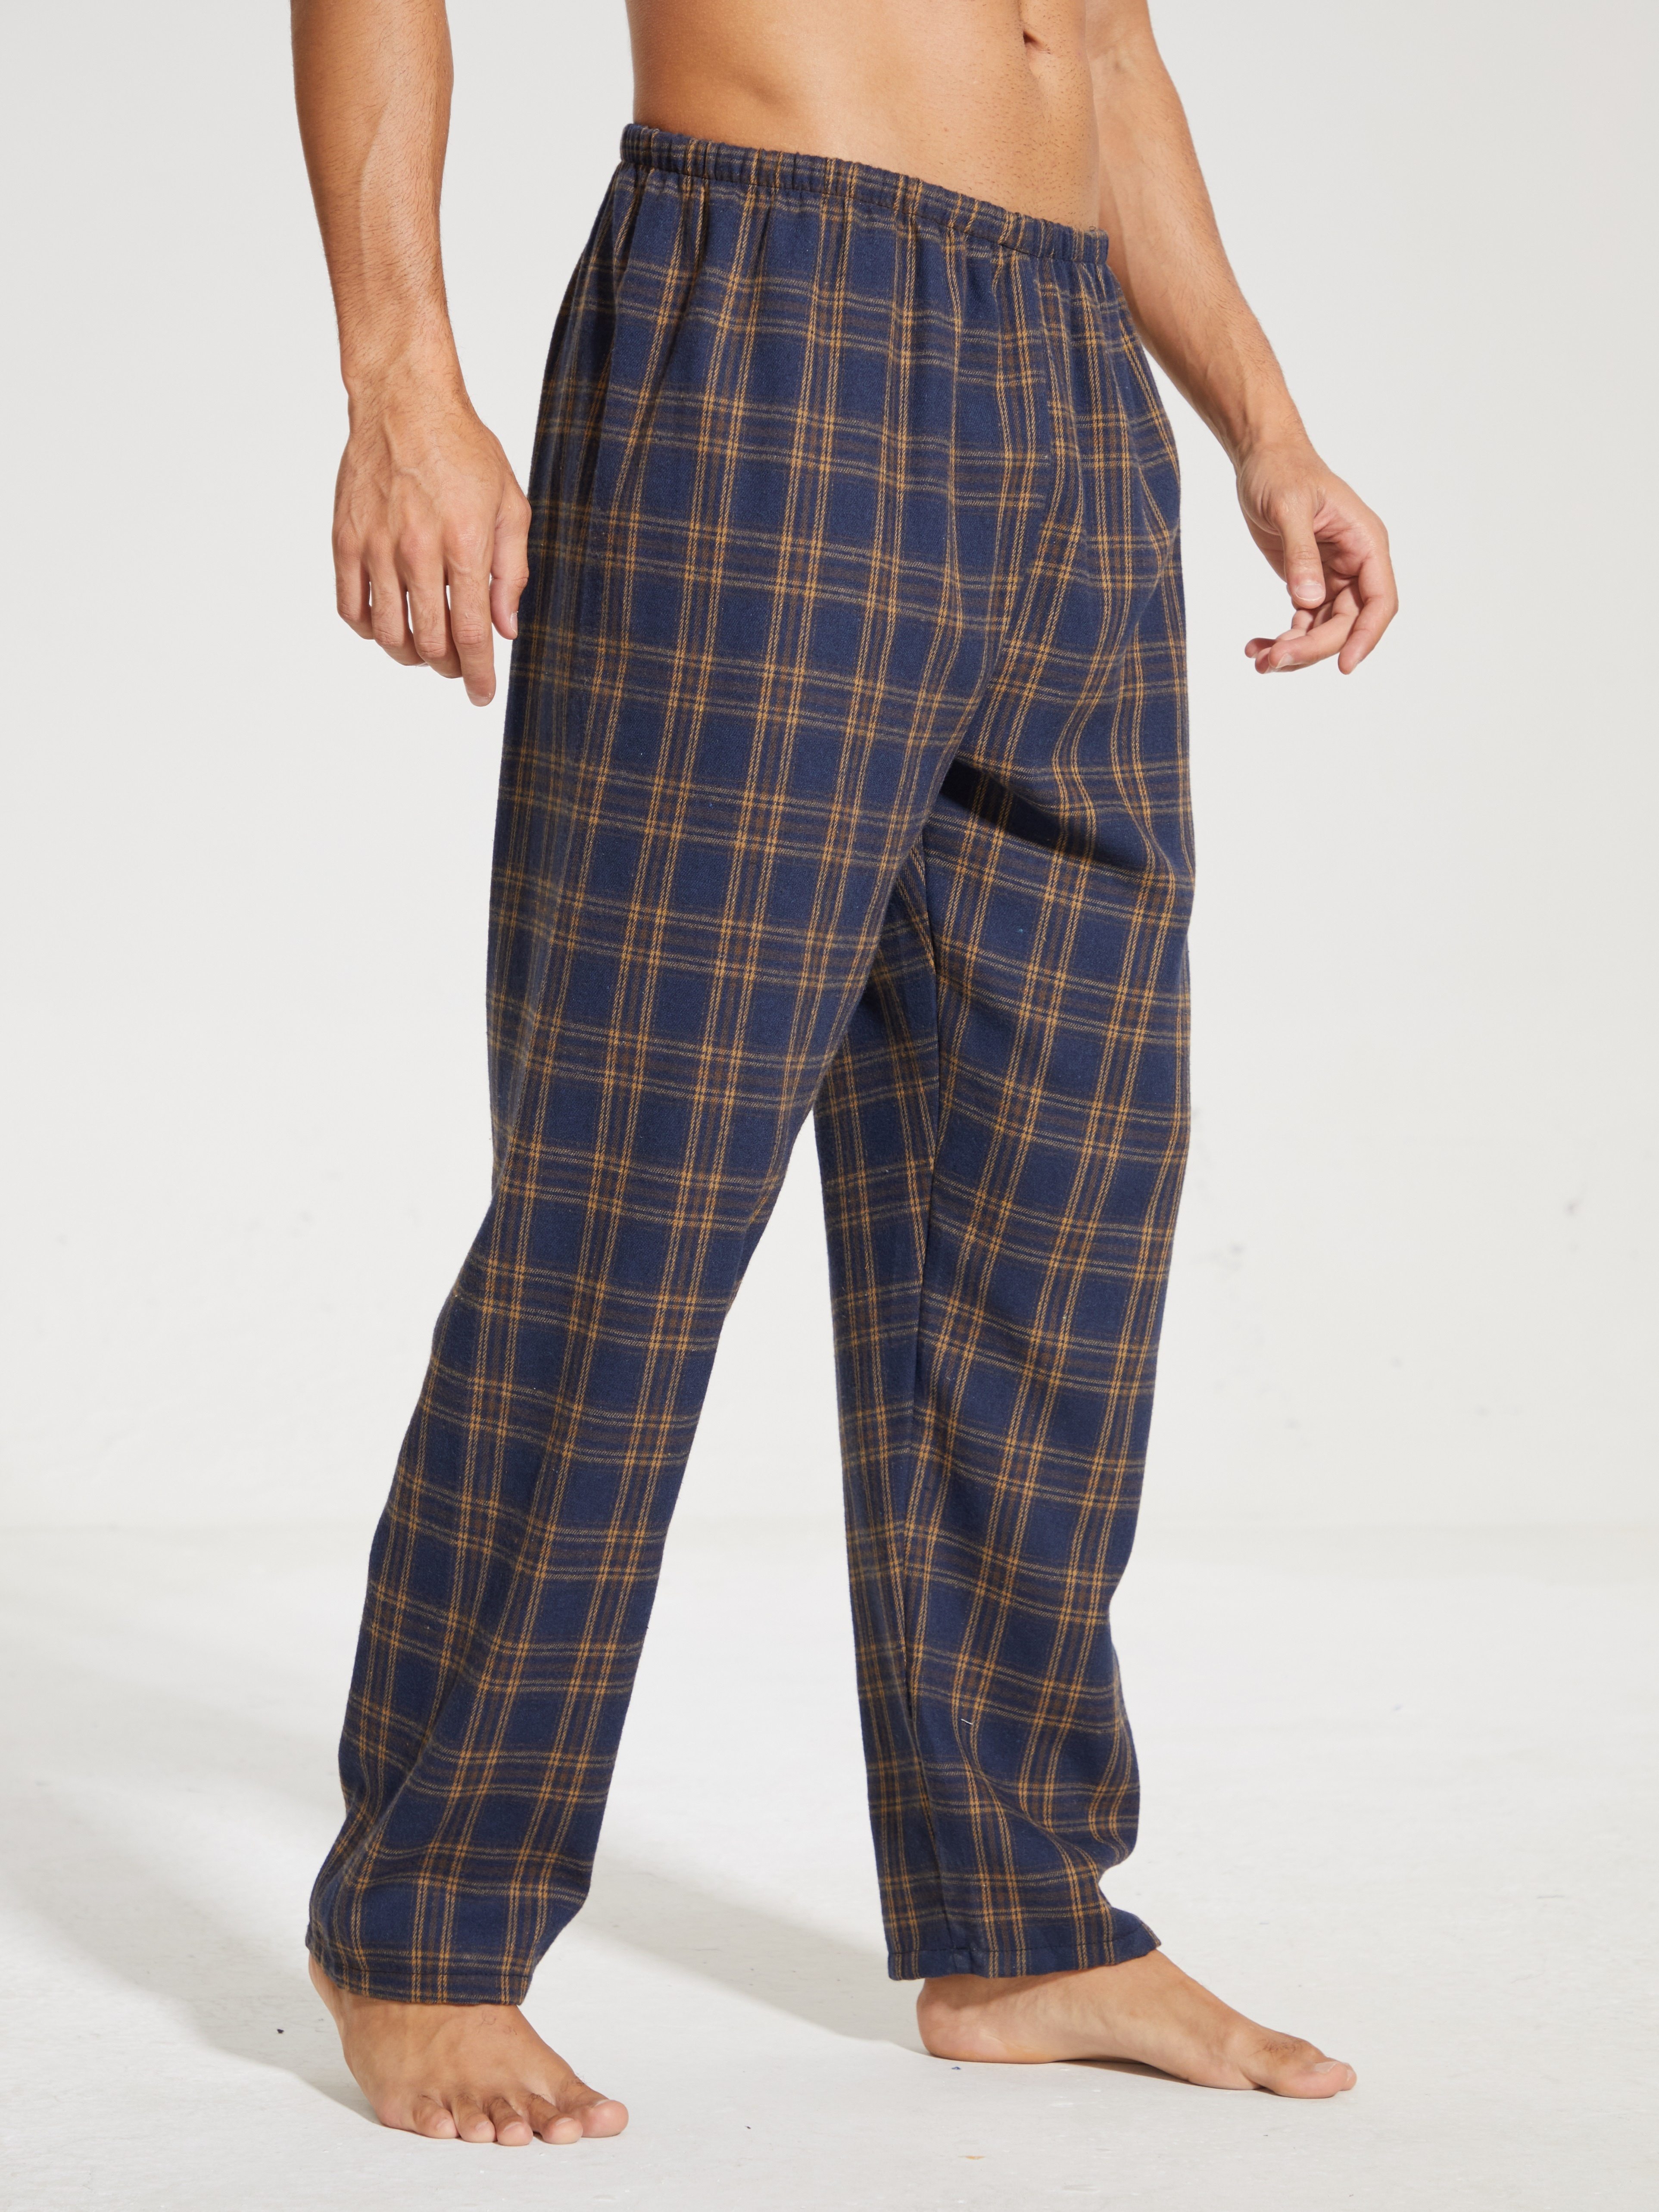 Men's Classic Fashion Casual Plaid Blue Long Pants Pajama, Comfy Elastic  Waist Sleep Bottom, Loungewear Trousers For All Seasons